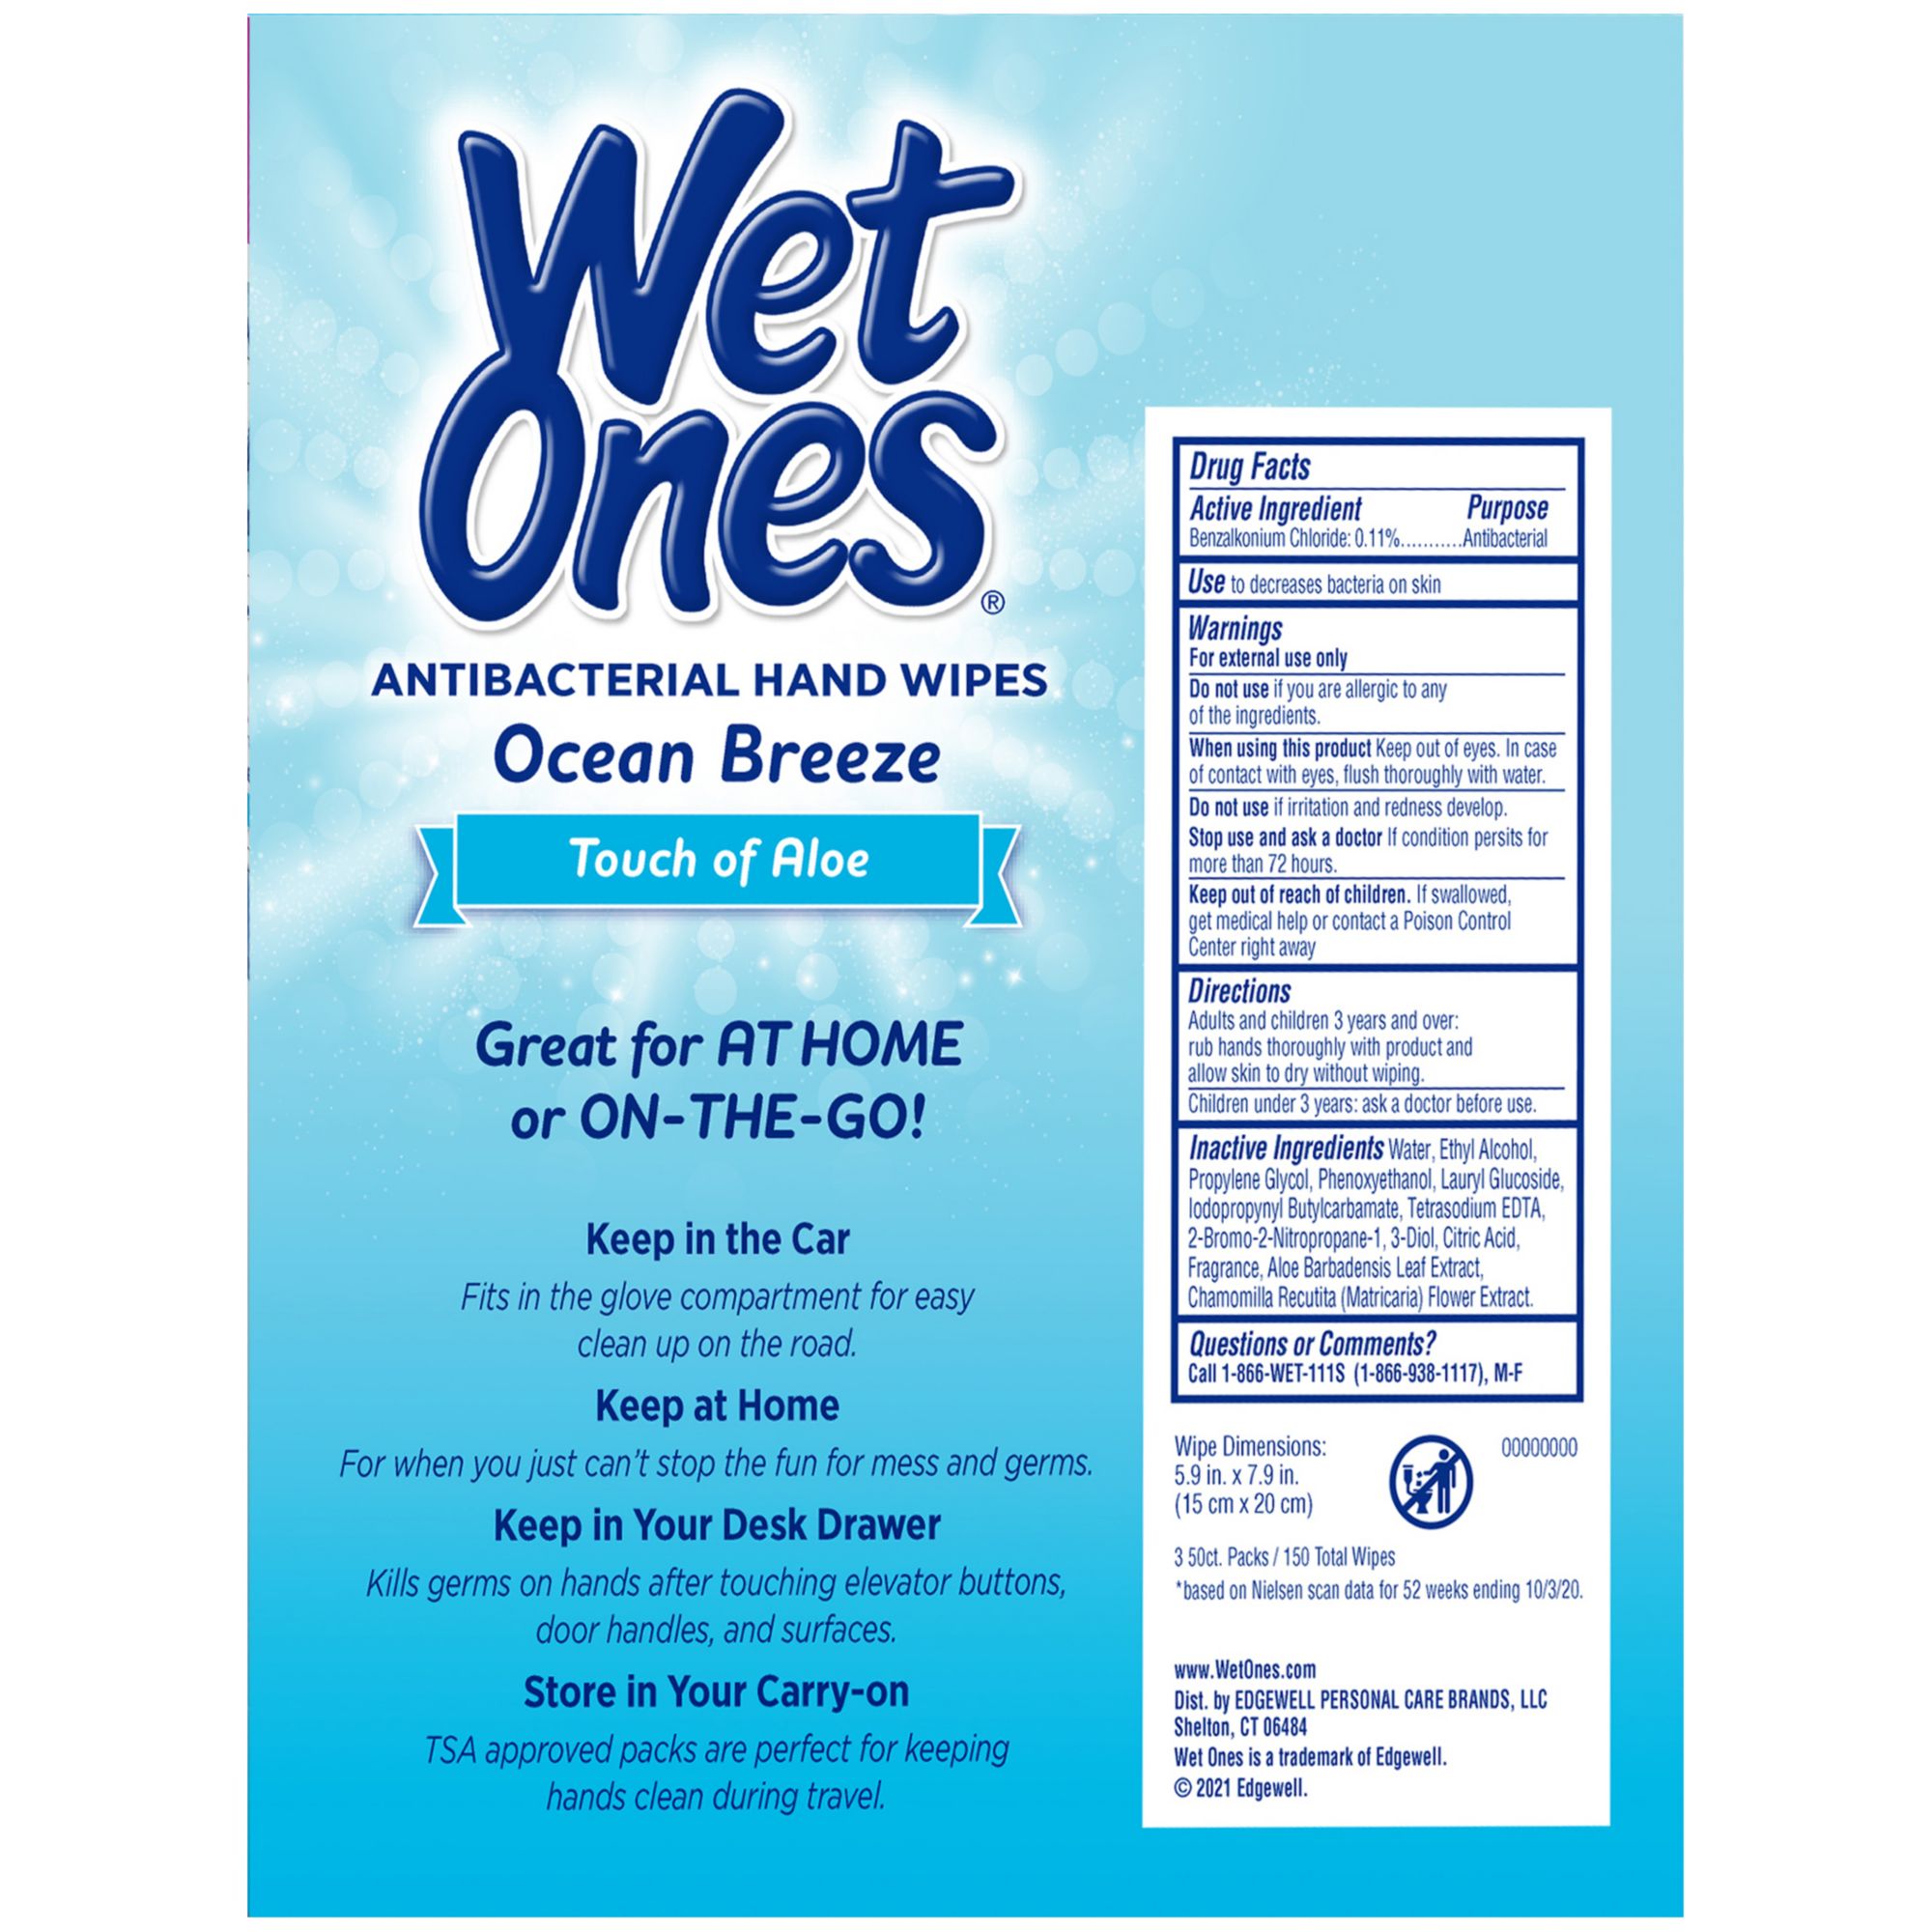 Wet Ones Antibacterial Hand Wipes Travel Pack - Fresh Scent, 7 pk./20 ct.